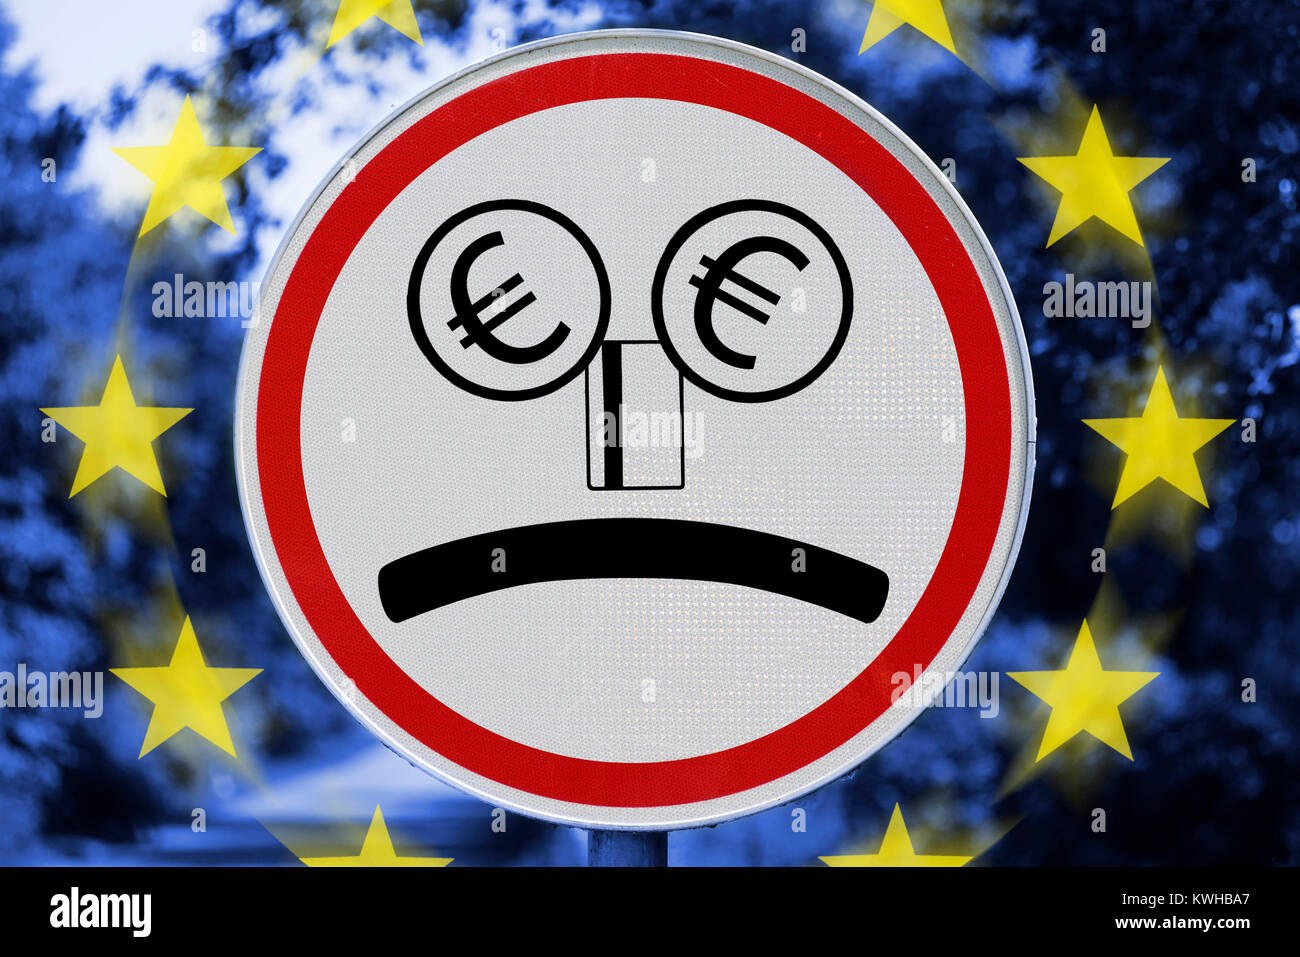 Toll sign as sad Smiley, the EU stops German passenger car toll, Maut-Schild als trauriger Smiley, EU stoppt deutsche PKW-Maut Stock Photo